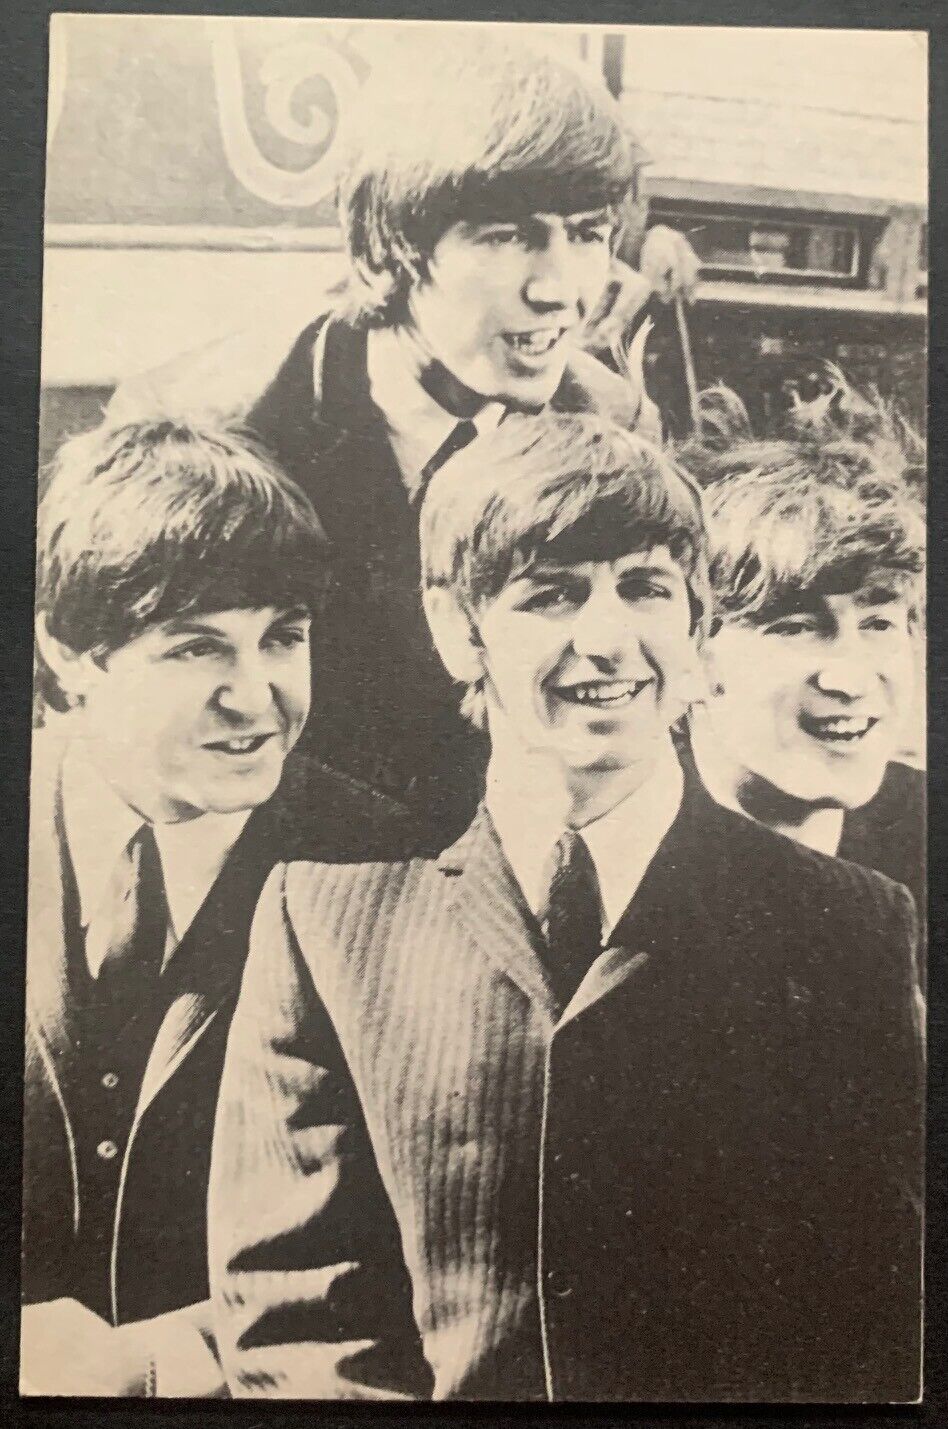 1964 The Beatles Exhibit Card Photo Vintage Paul McCartney John Lennon Harrison